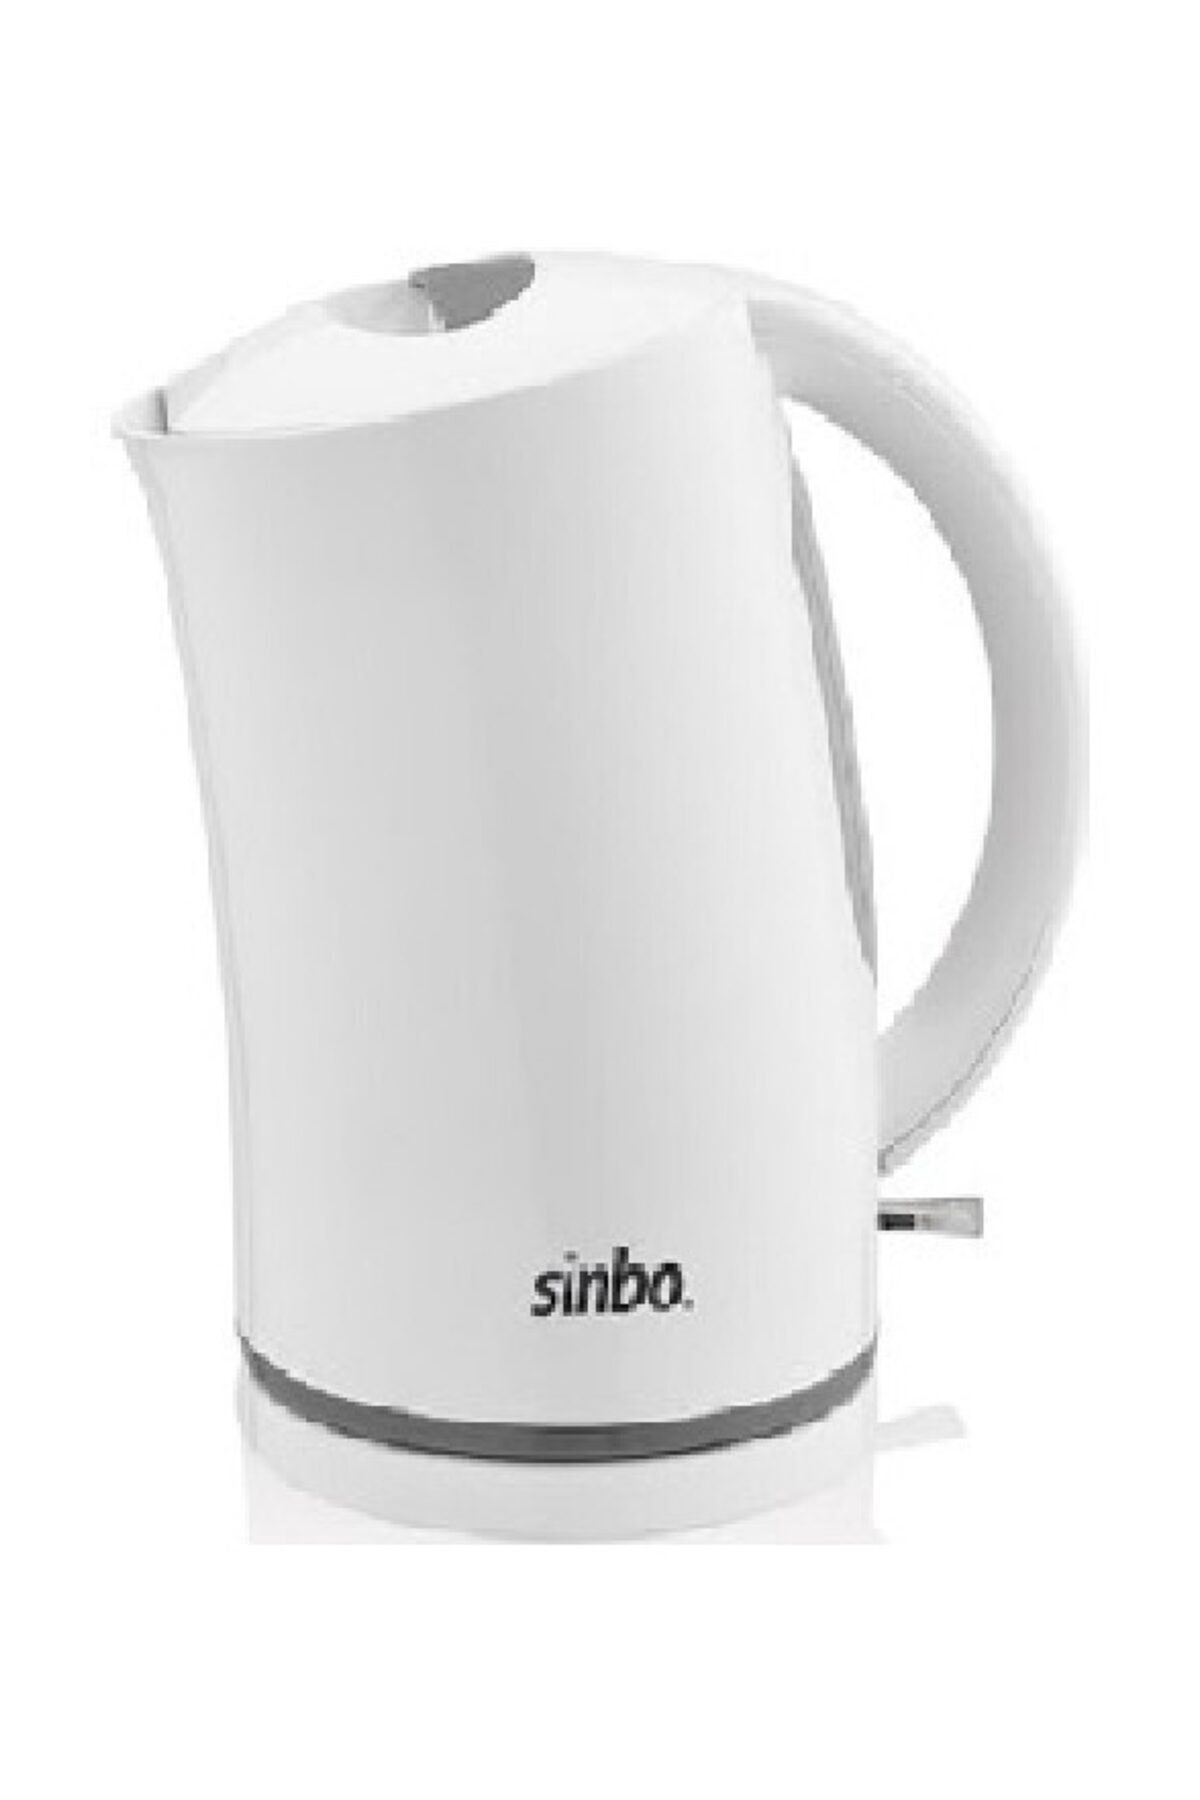 Sinbo SK-8007 2000 W 1.8 LT Su Isıtıcı